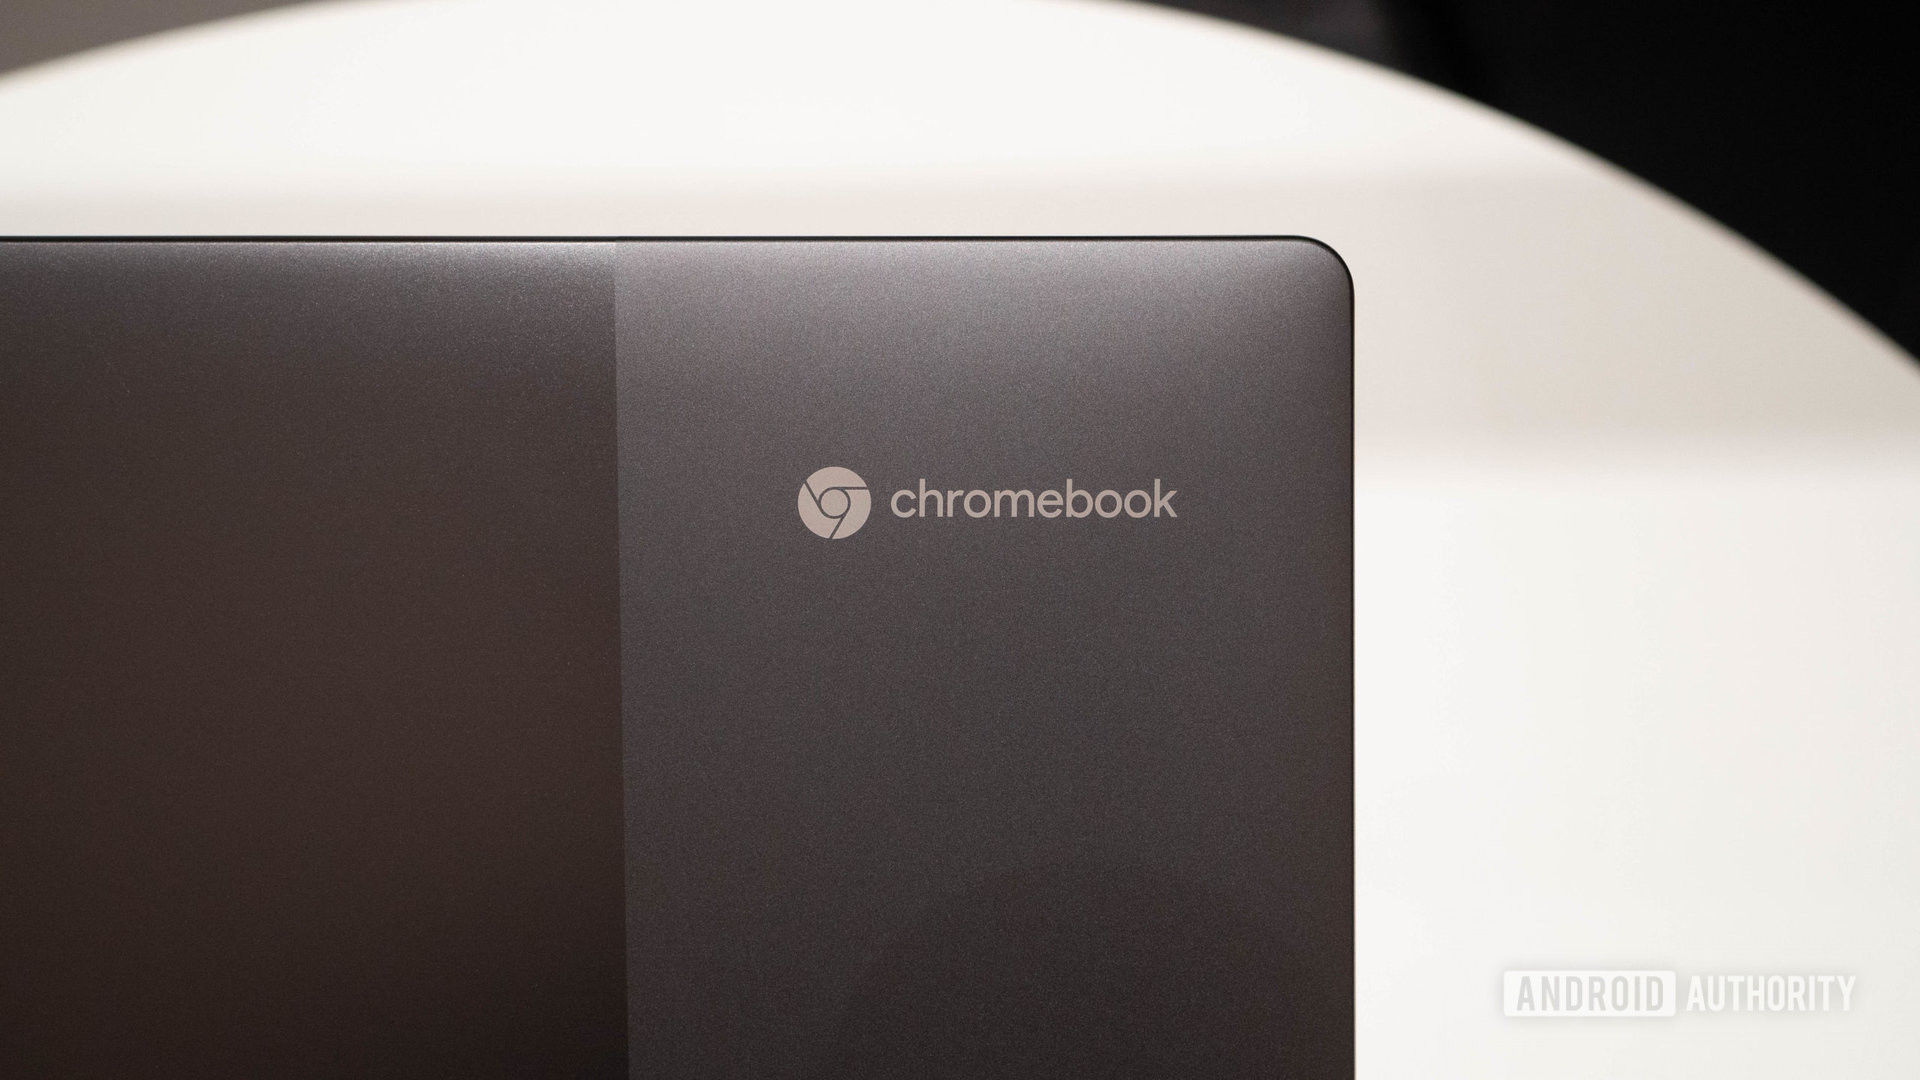 联想IdeaPad 5i Chromebook显示Chromebook徽标